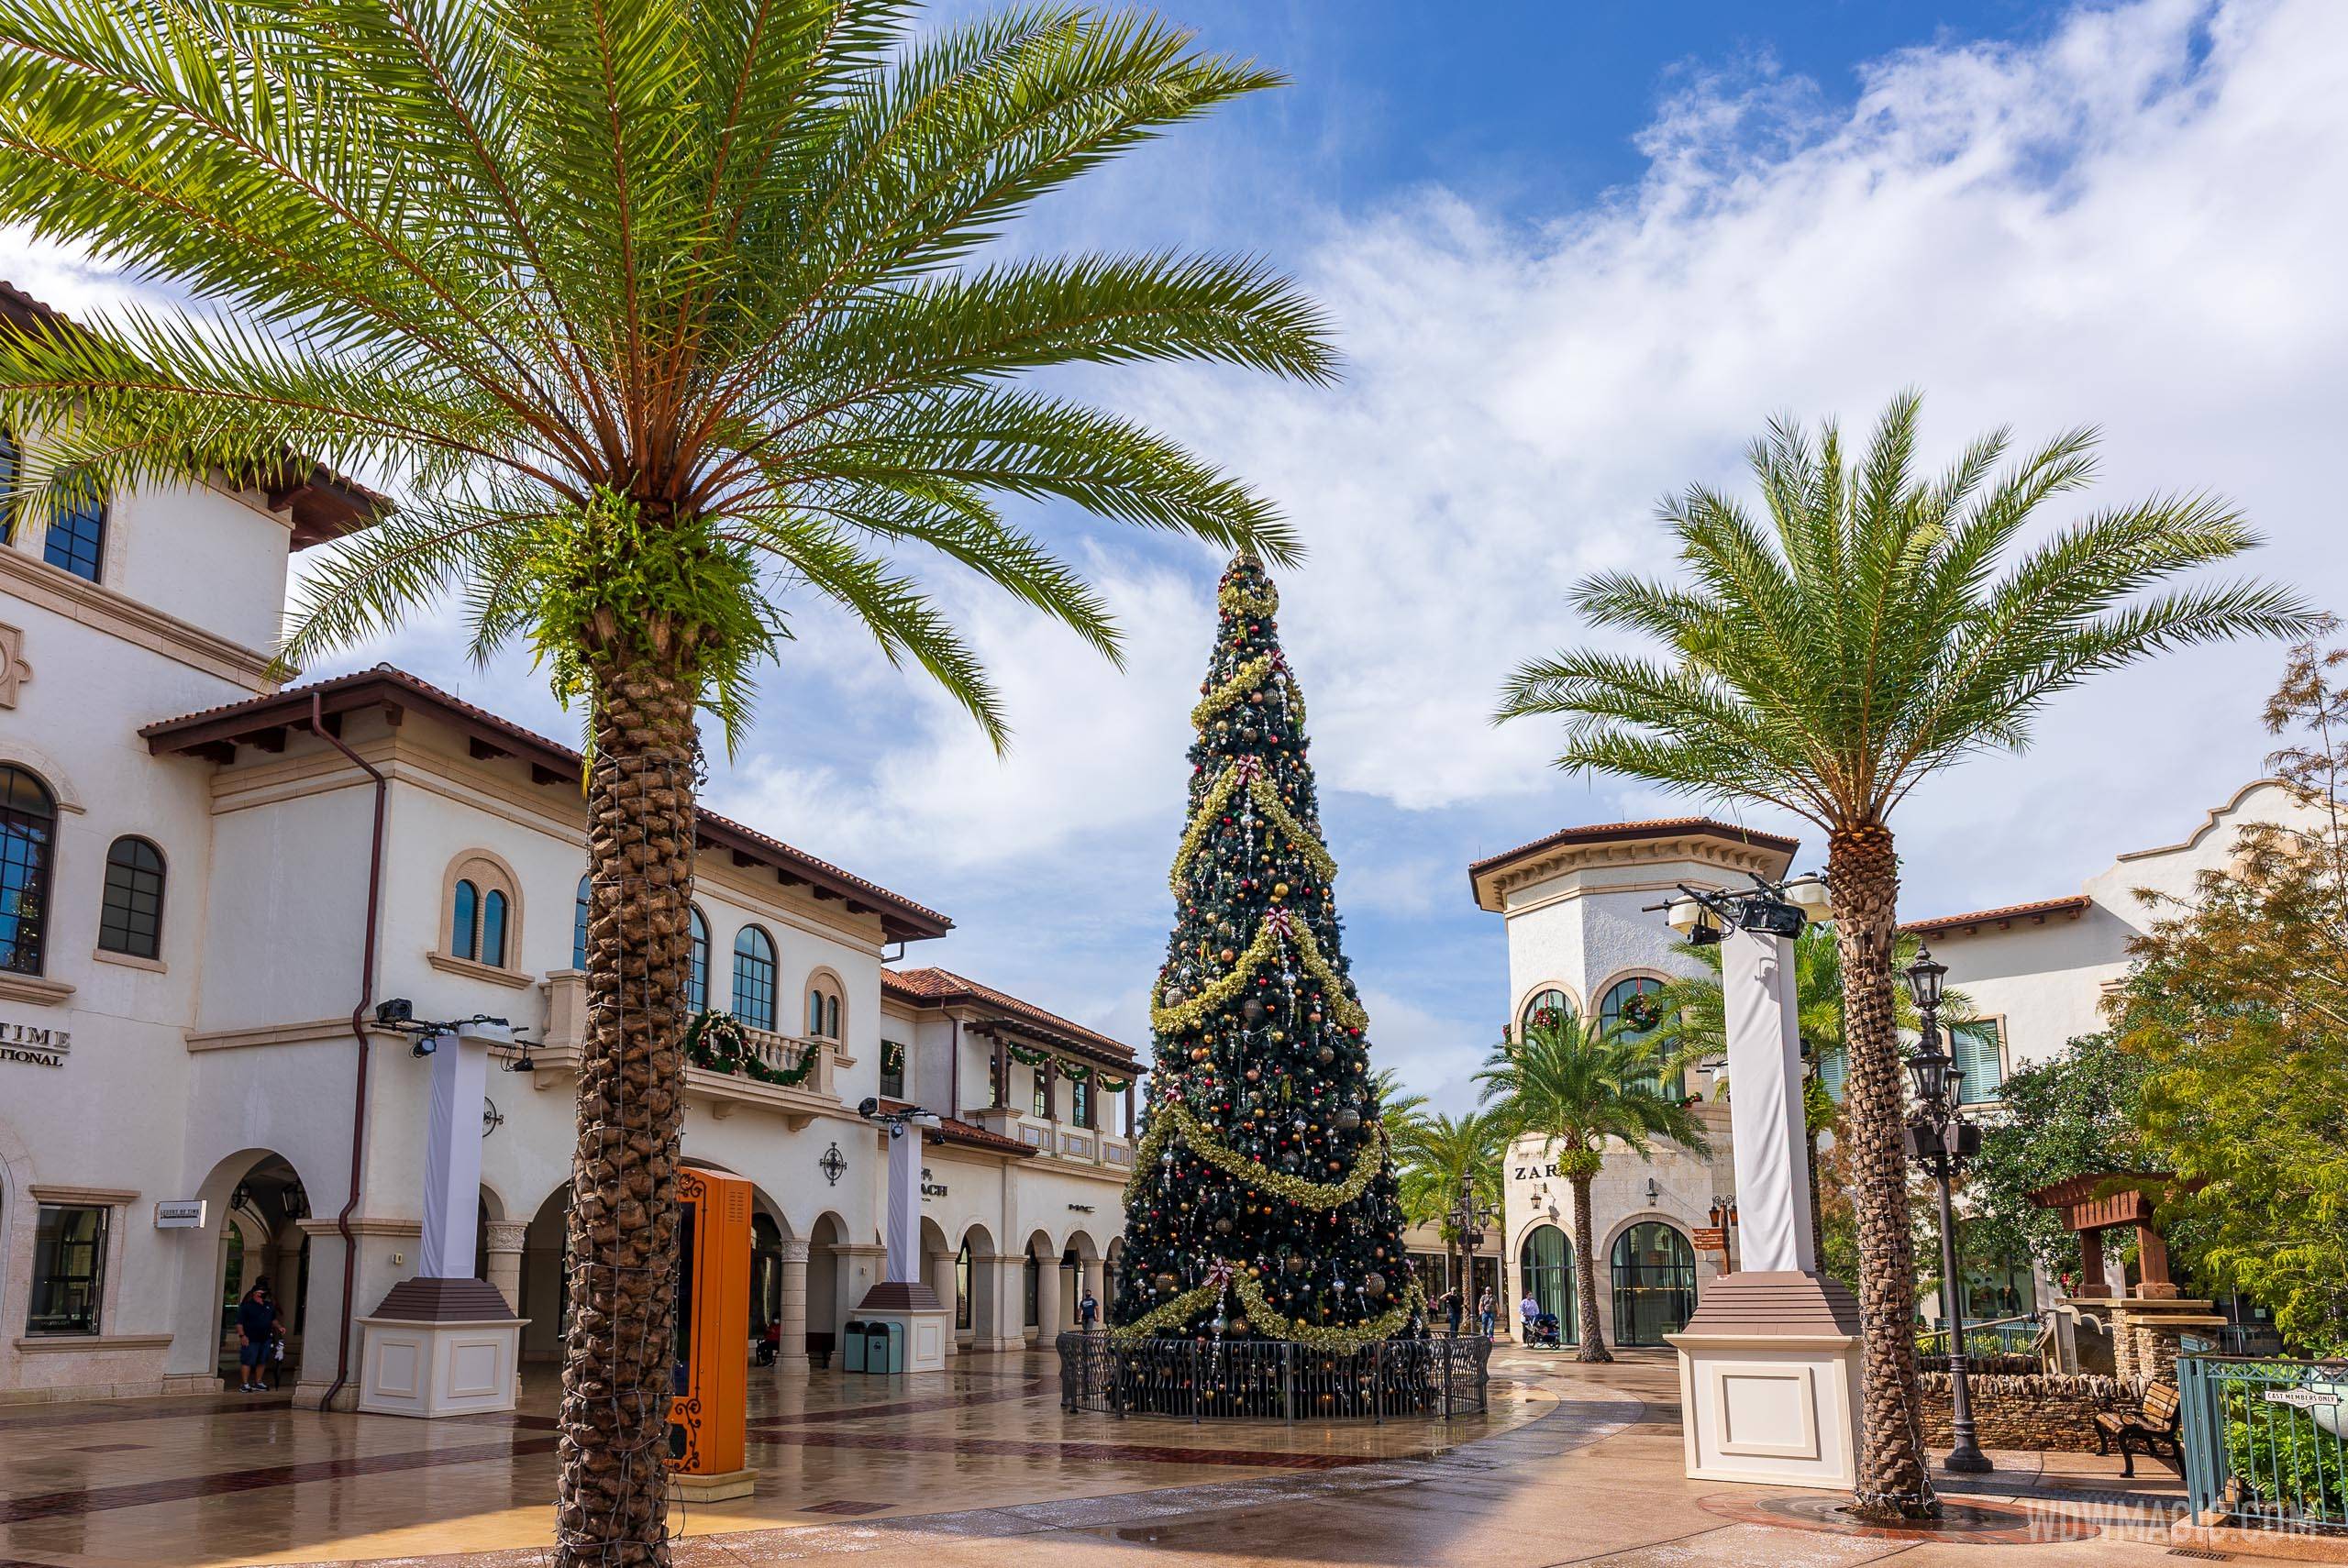 Disney Springs Christmas holiday decor 2020